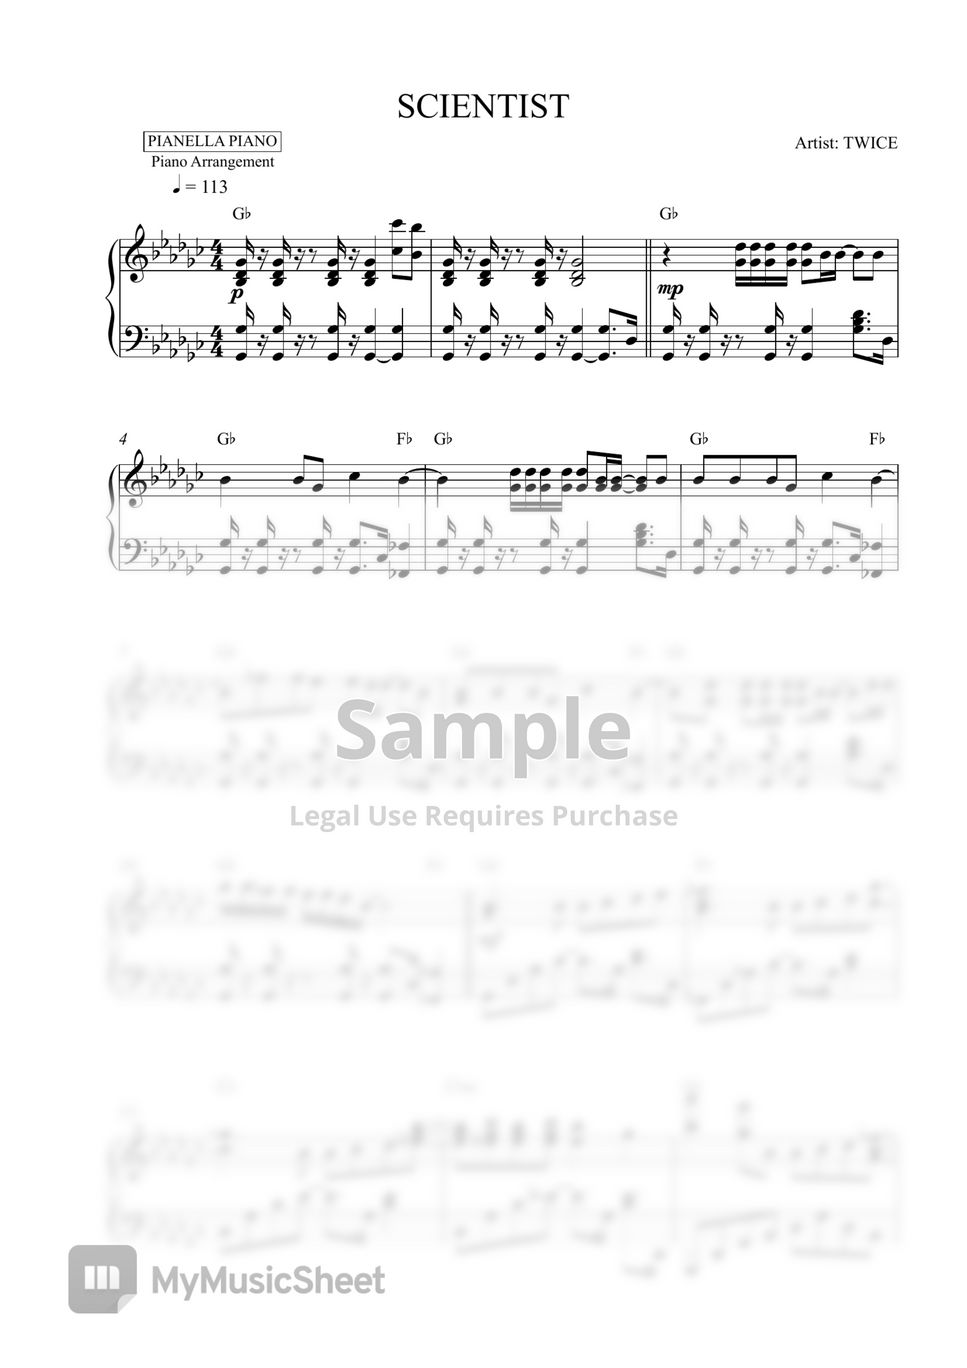 TWICE - SCIENTIST (2 PDF: Original Key Gb & Easier Key G) by Pianella Piano